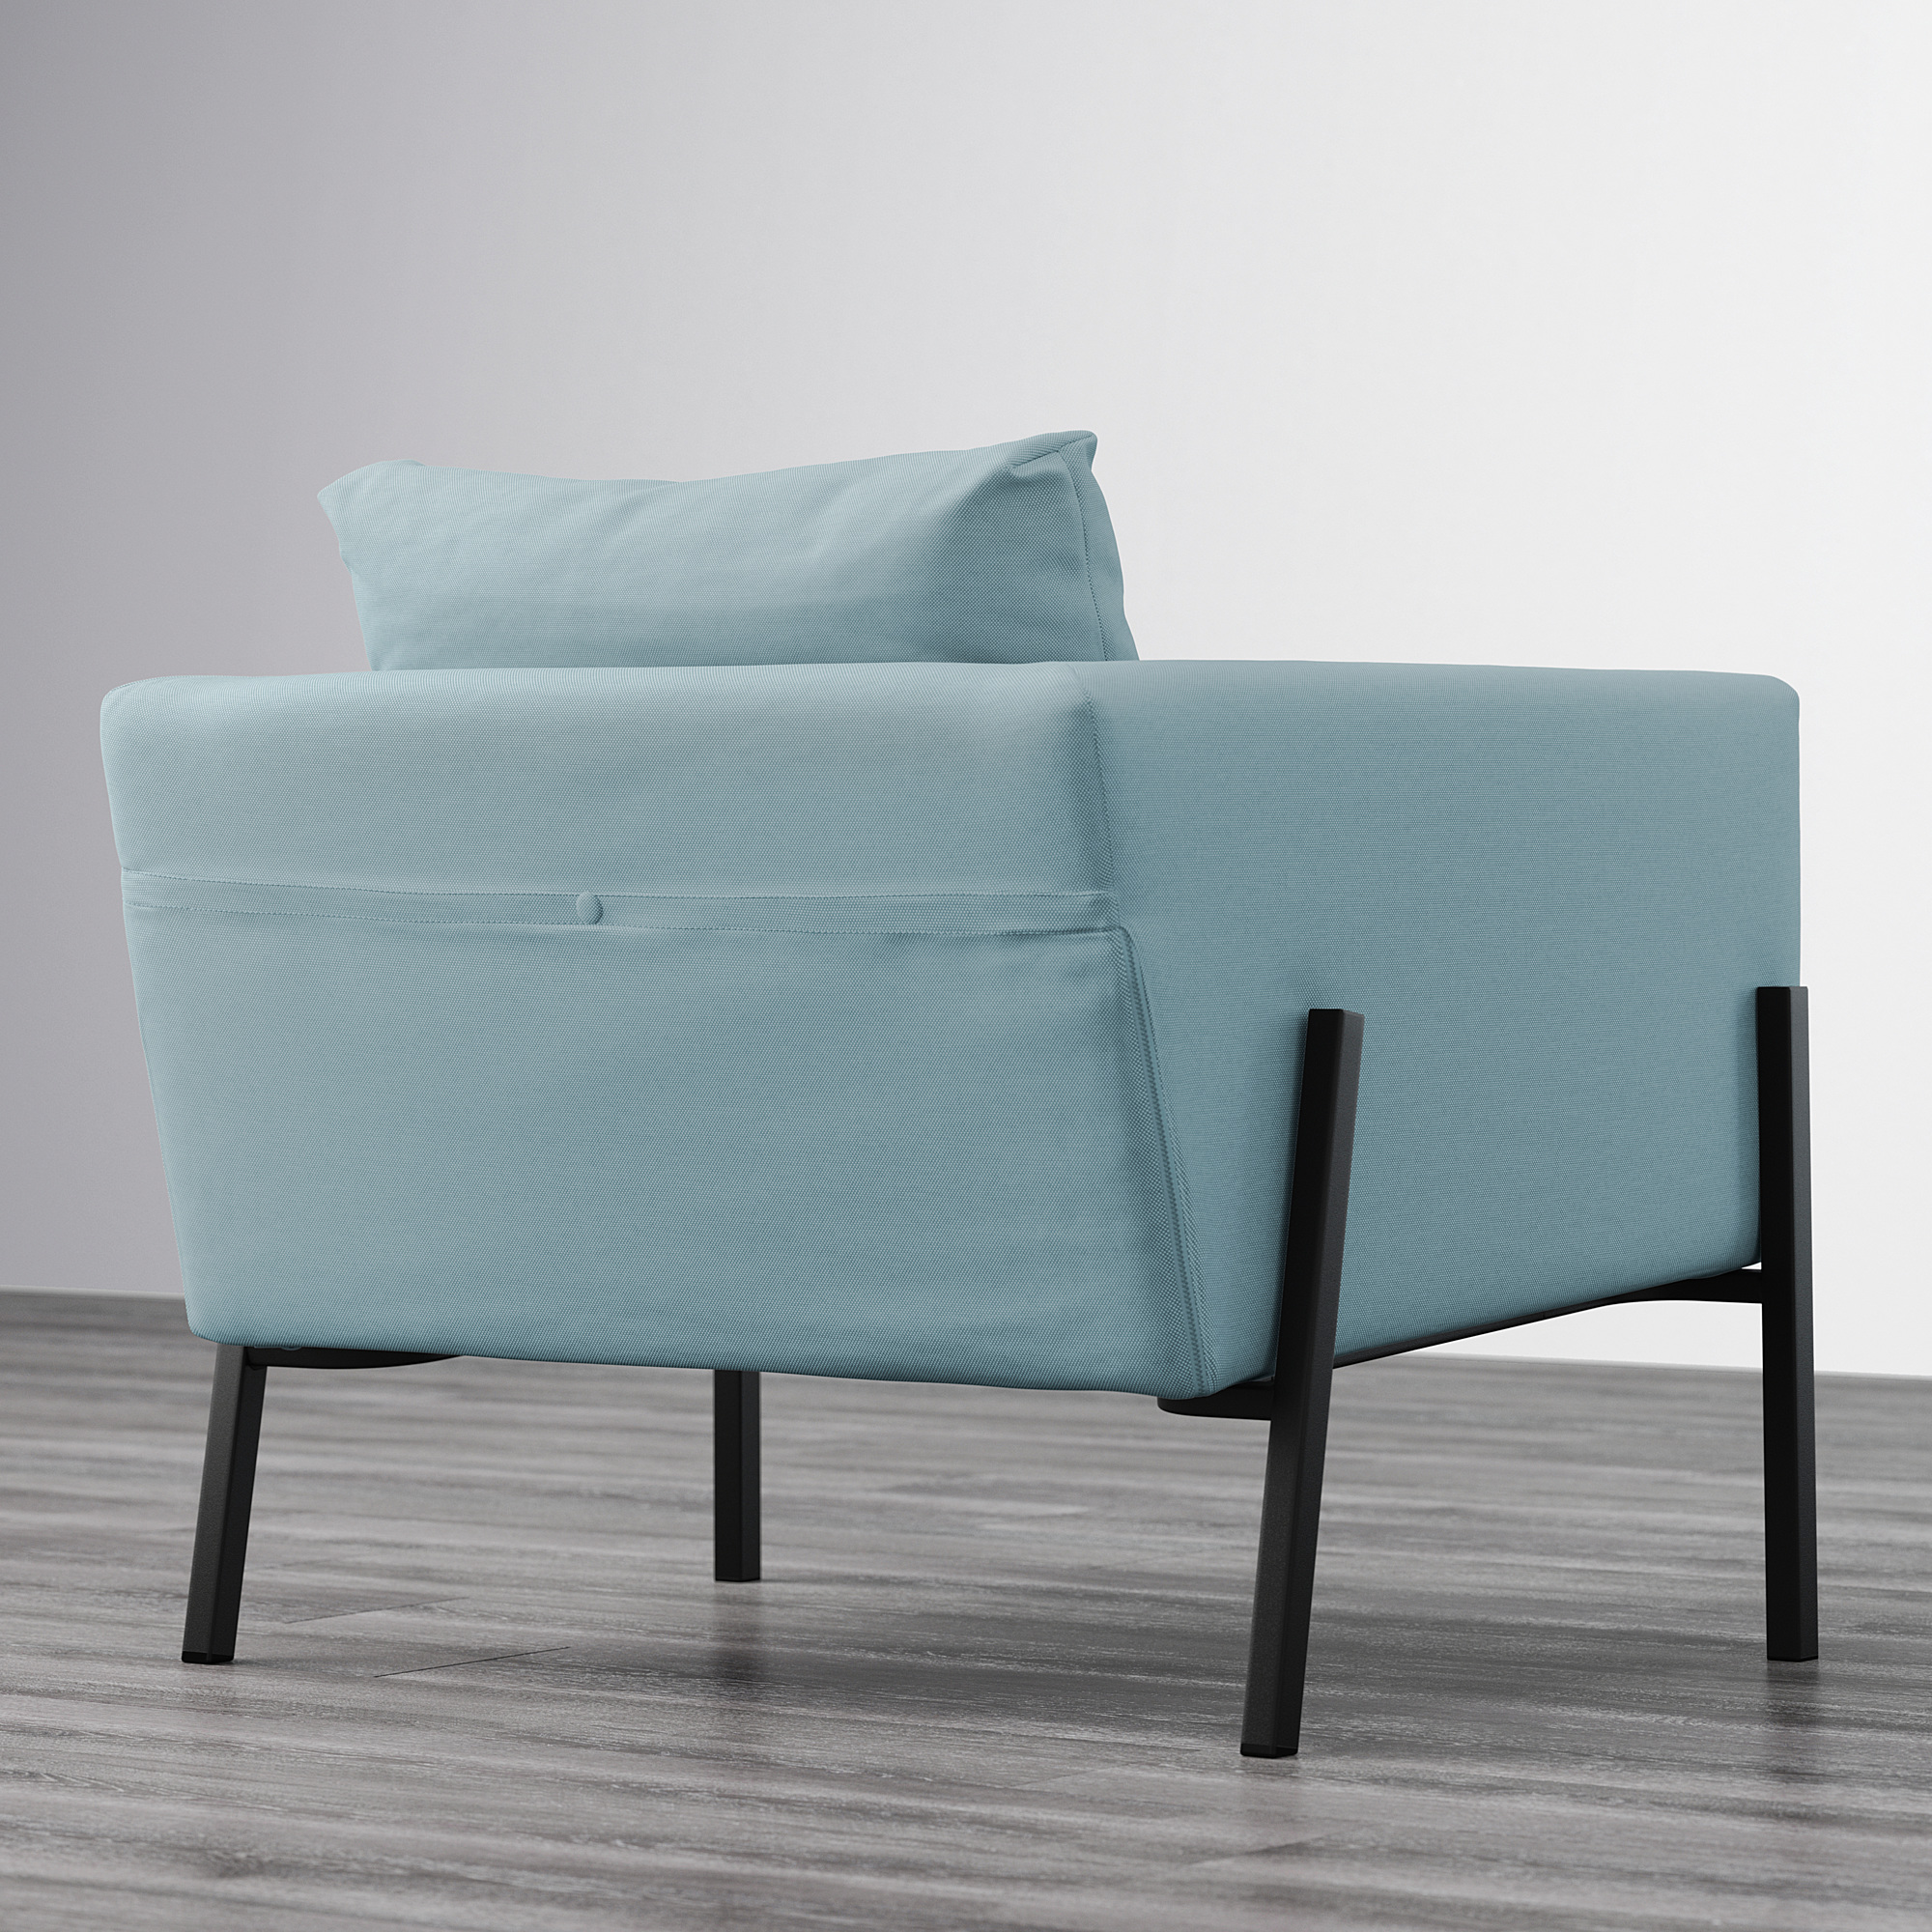 KOARP kursi berlengan Orrsta biru muda hitam IKEA  Indonesia